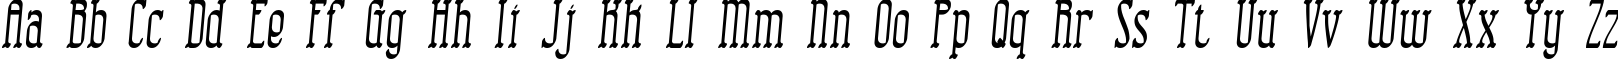 Пример написания английского алфавита шрифтом Combustion II BRK